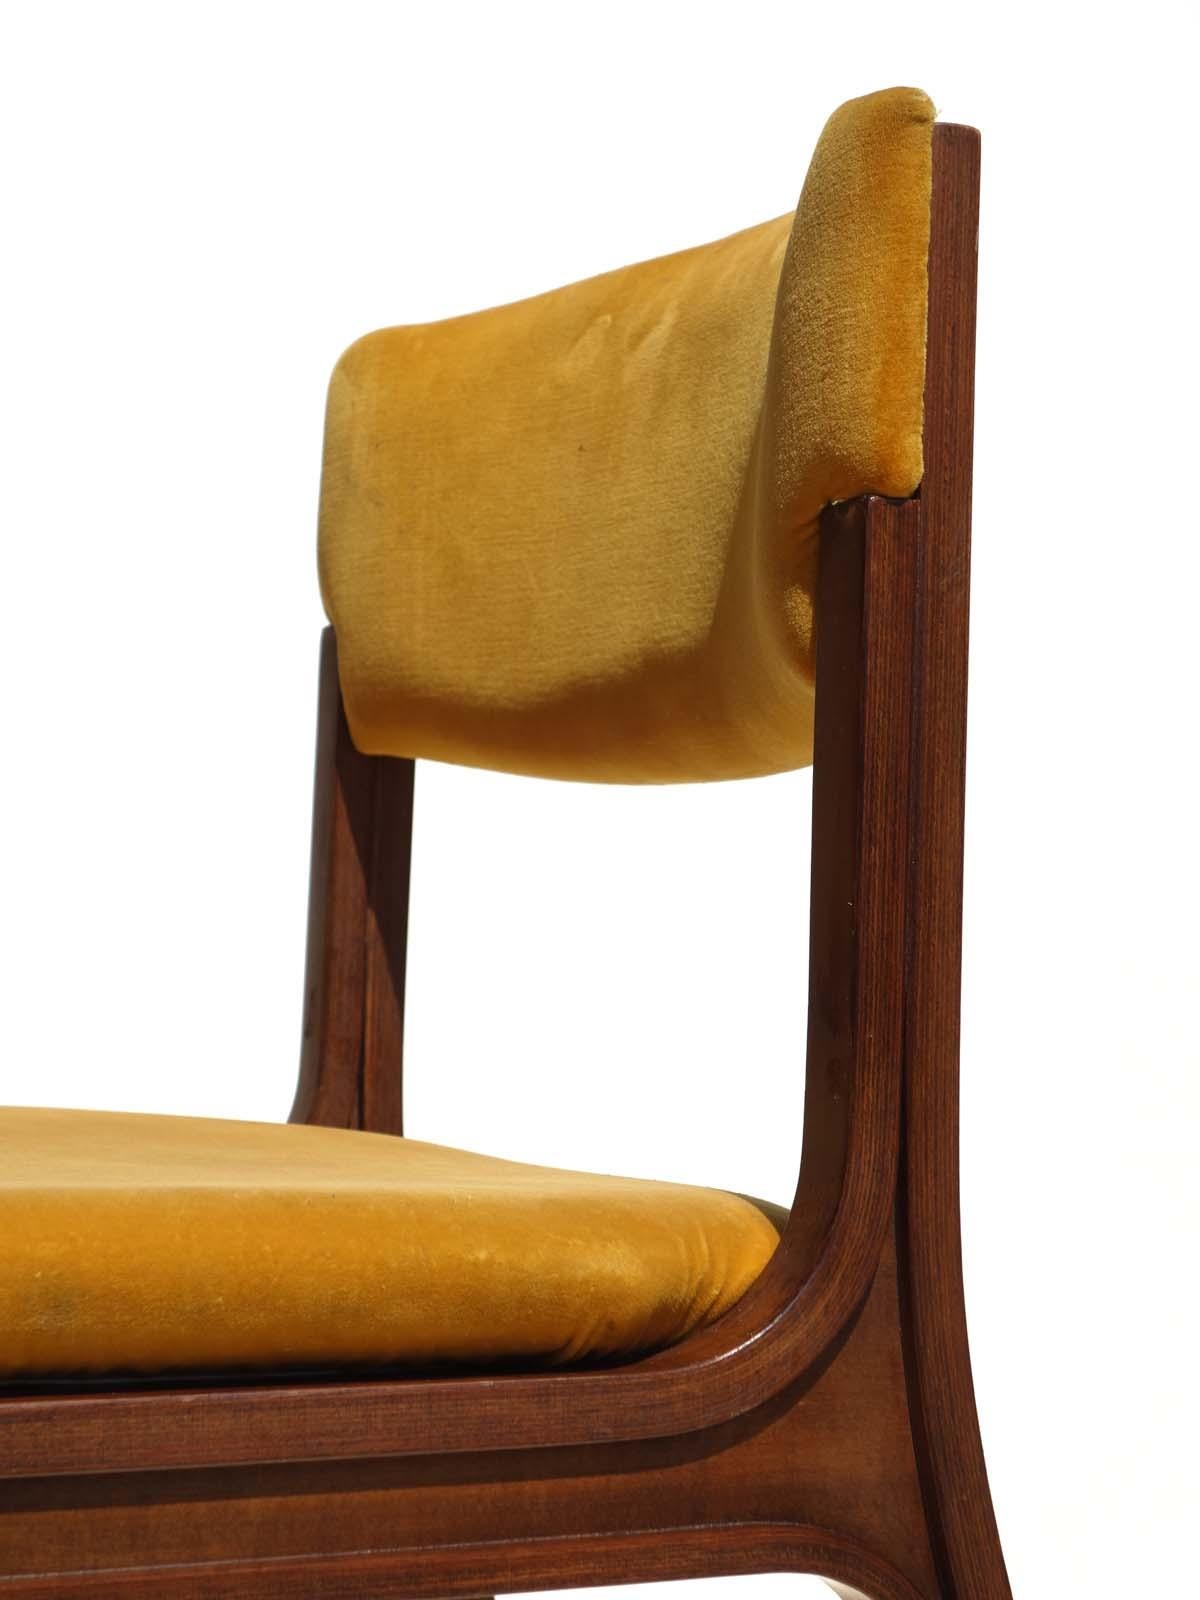 Wood 1960 Gianfranco Frattini for Cantieri Carugati Italian Design Chairs, Set of 4